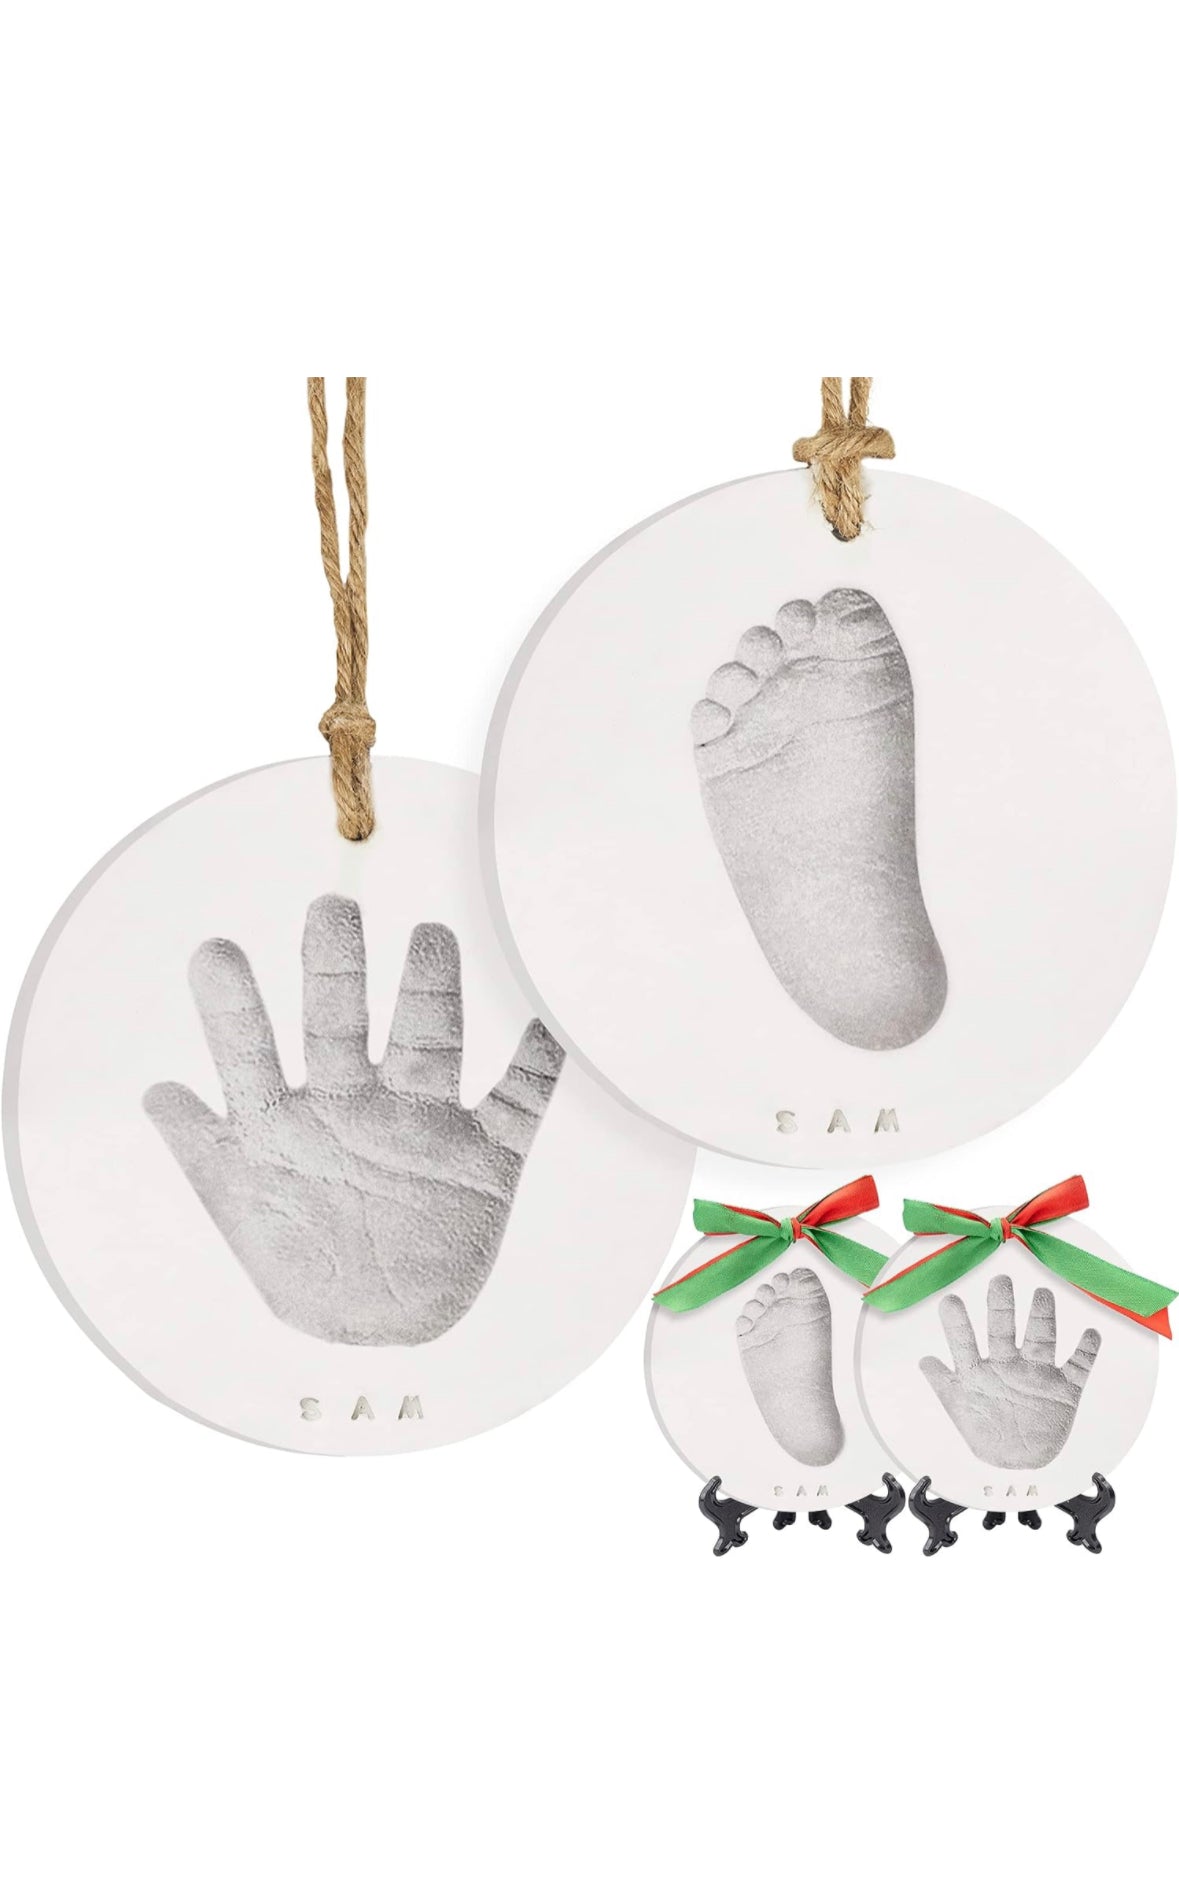 Baby Hand and Footprint Kit.